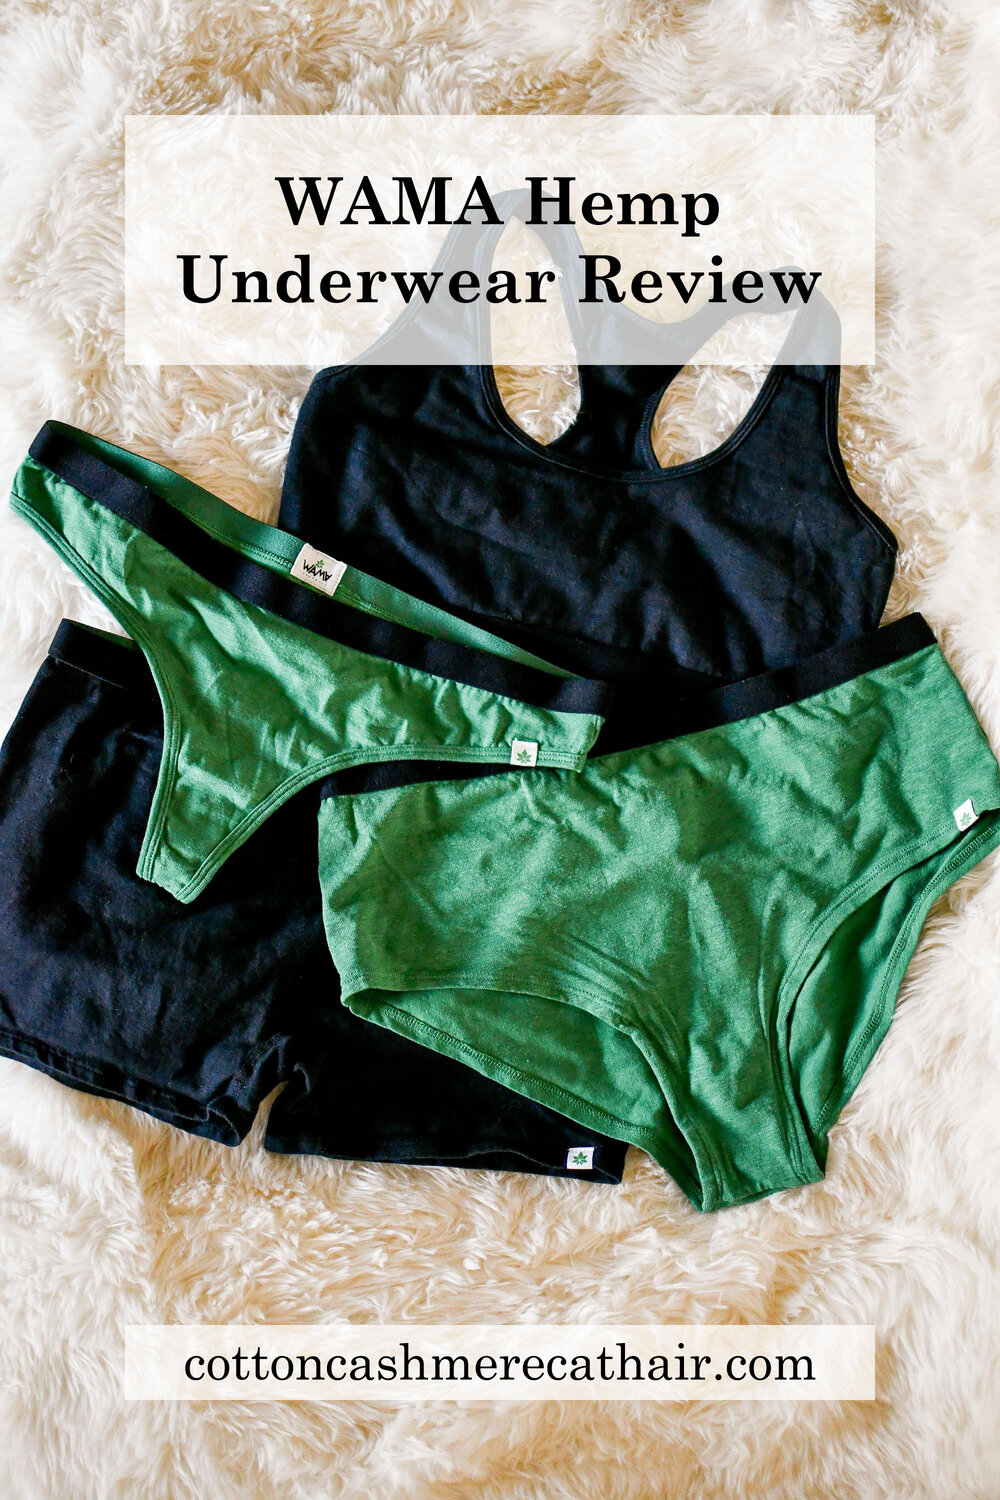 WAMA Hemp Underwear Review